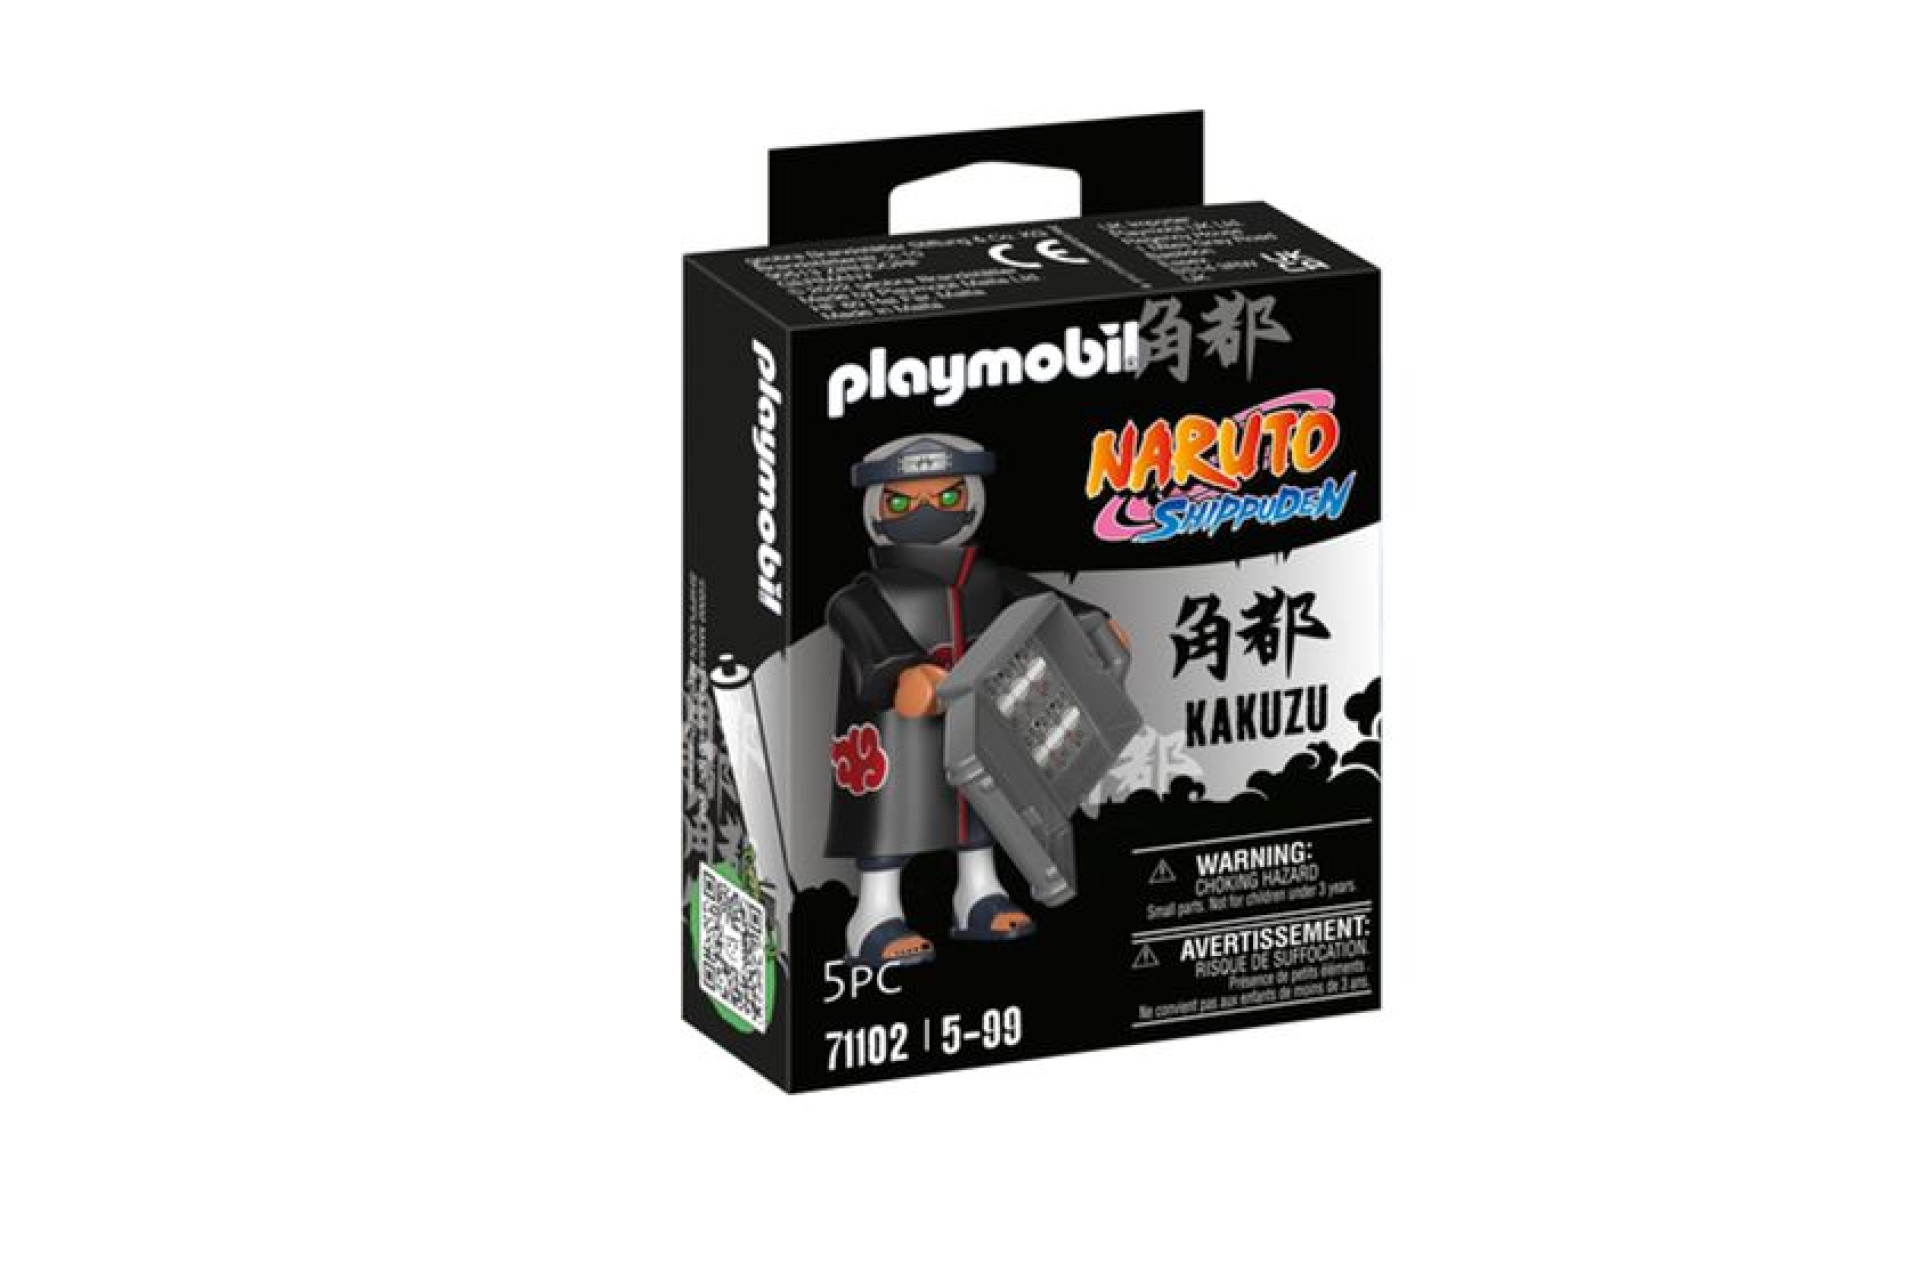 Acheter Playmobil Naruto 71102 Kakuzu